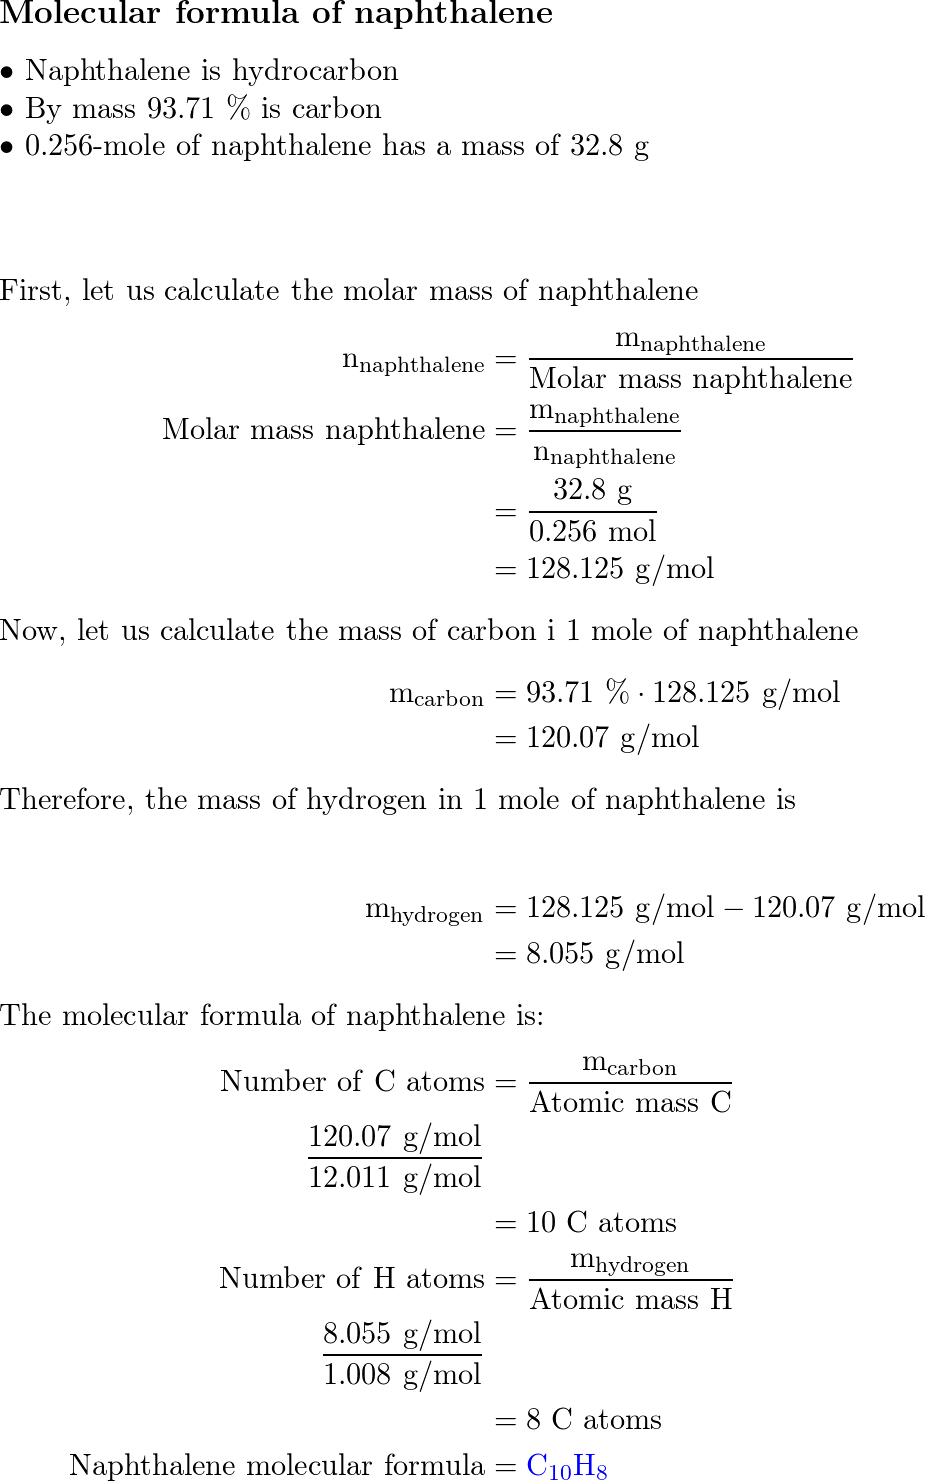 structural formula of naphthalene